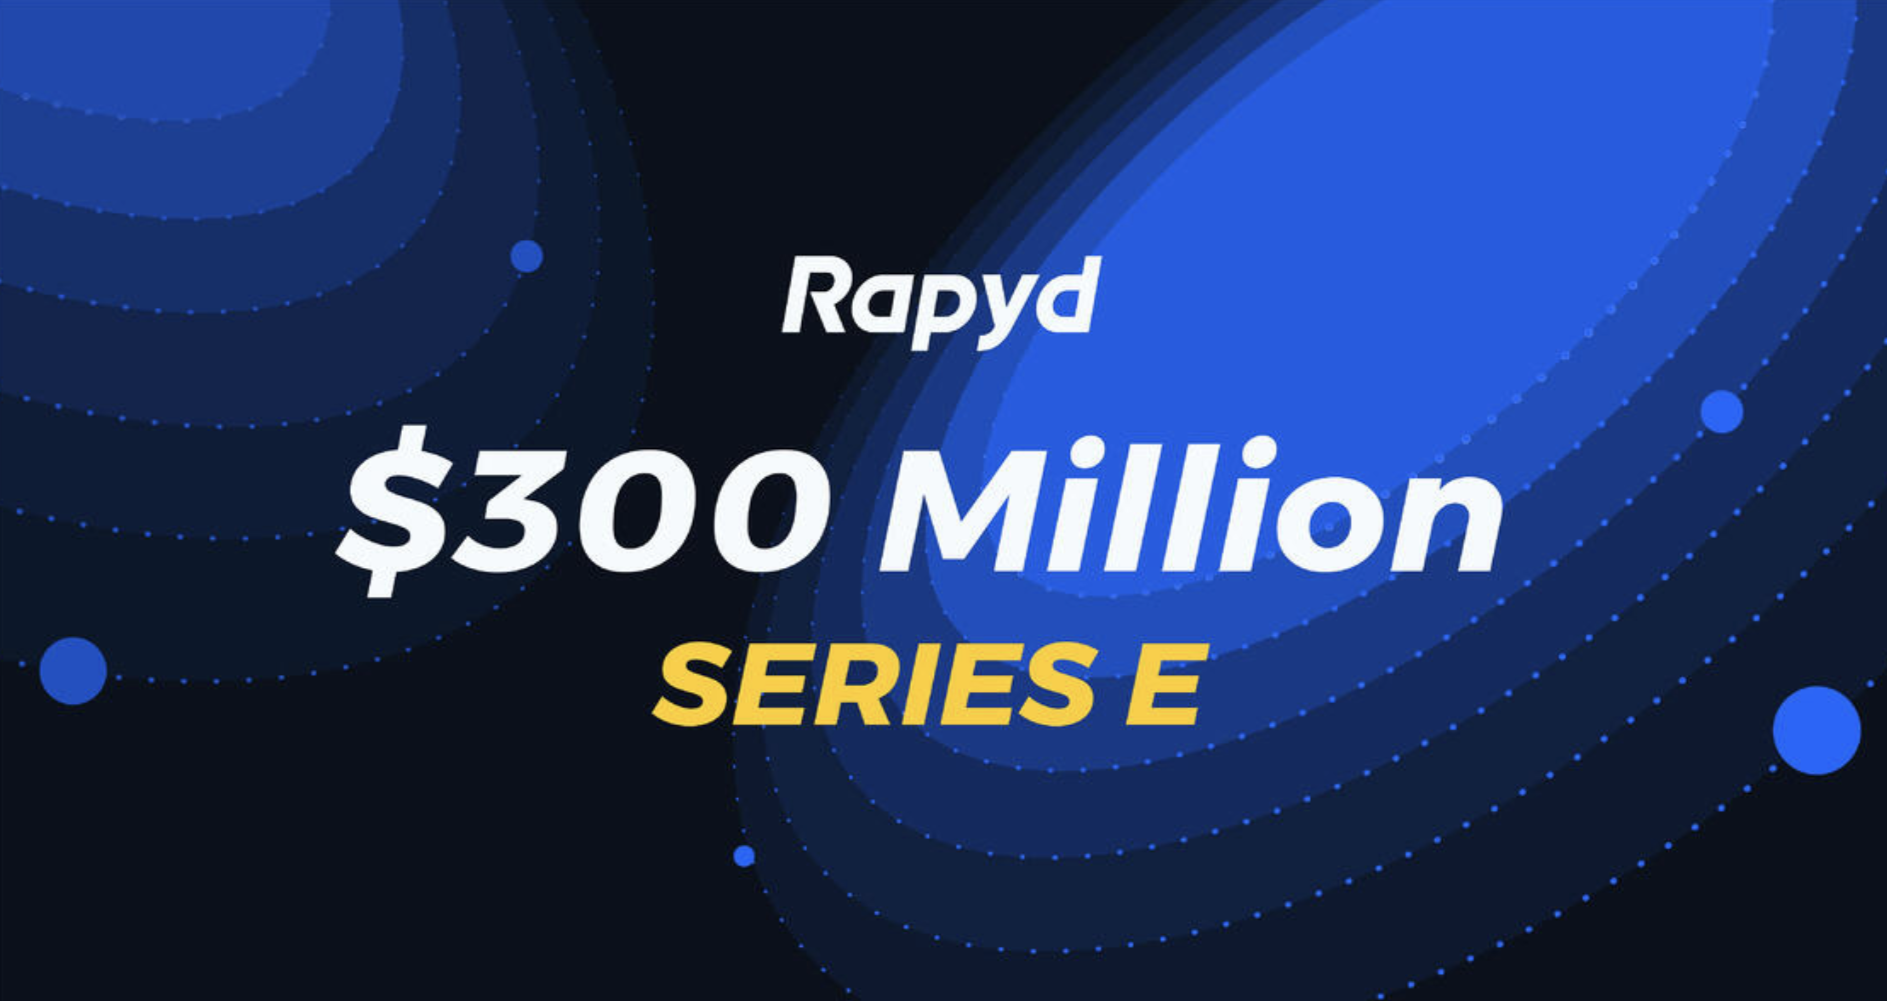 Rapyd raises series E funding